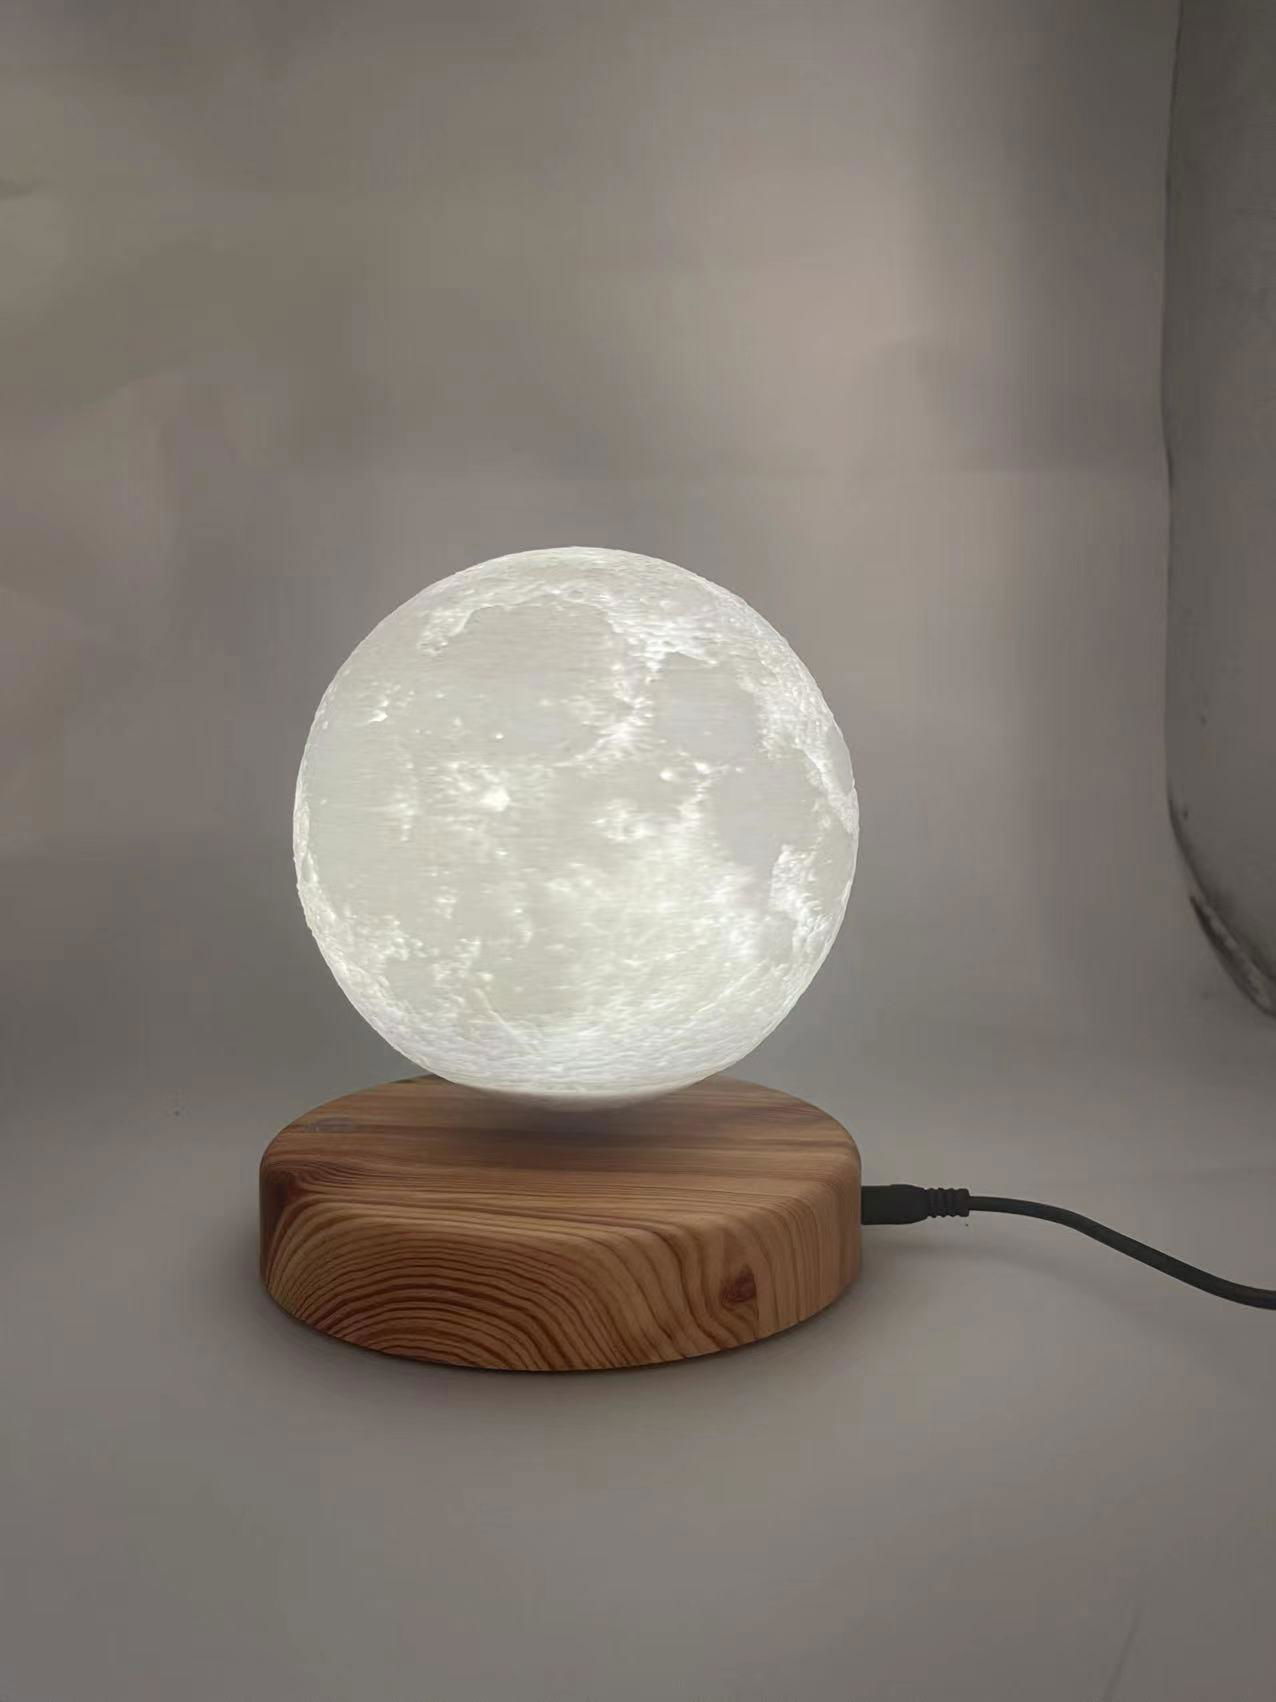 hotsale factory magnetic levitation desk luna ,floating 6inch moon light  4